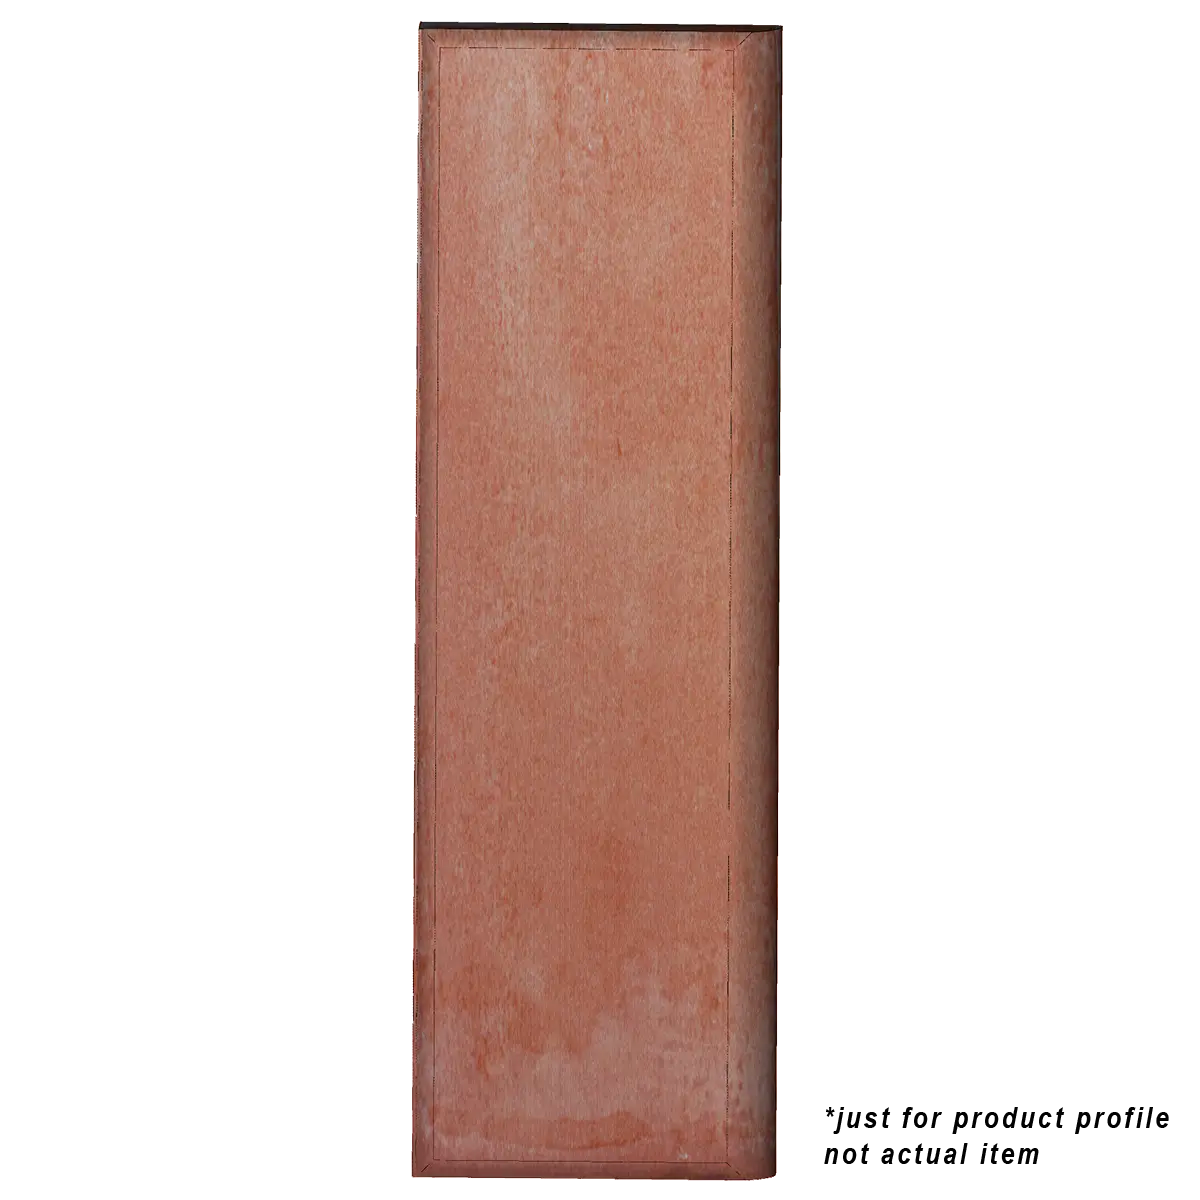 Olaria 2”x6” Ceramic Bullnose Trim Tile Baked Clay